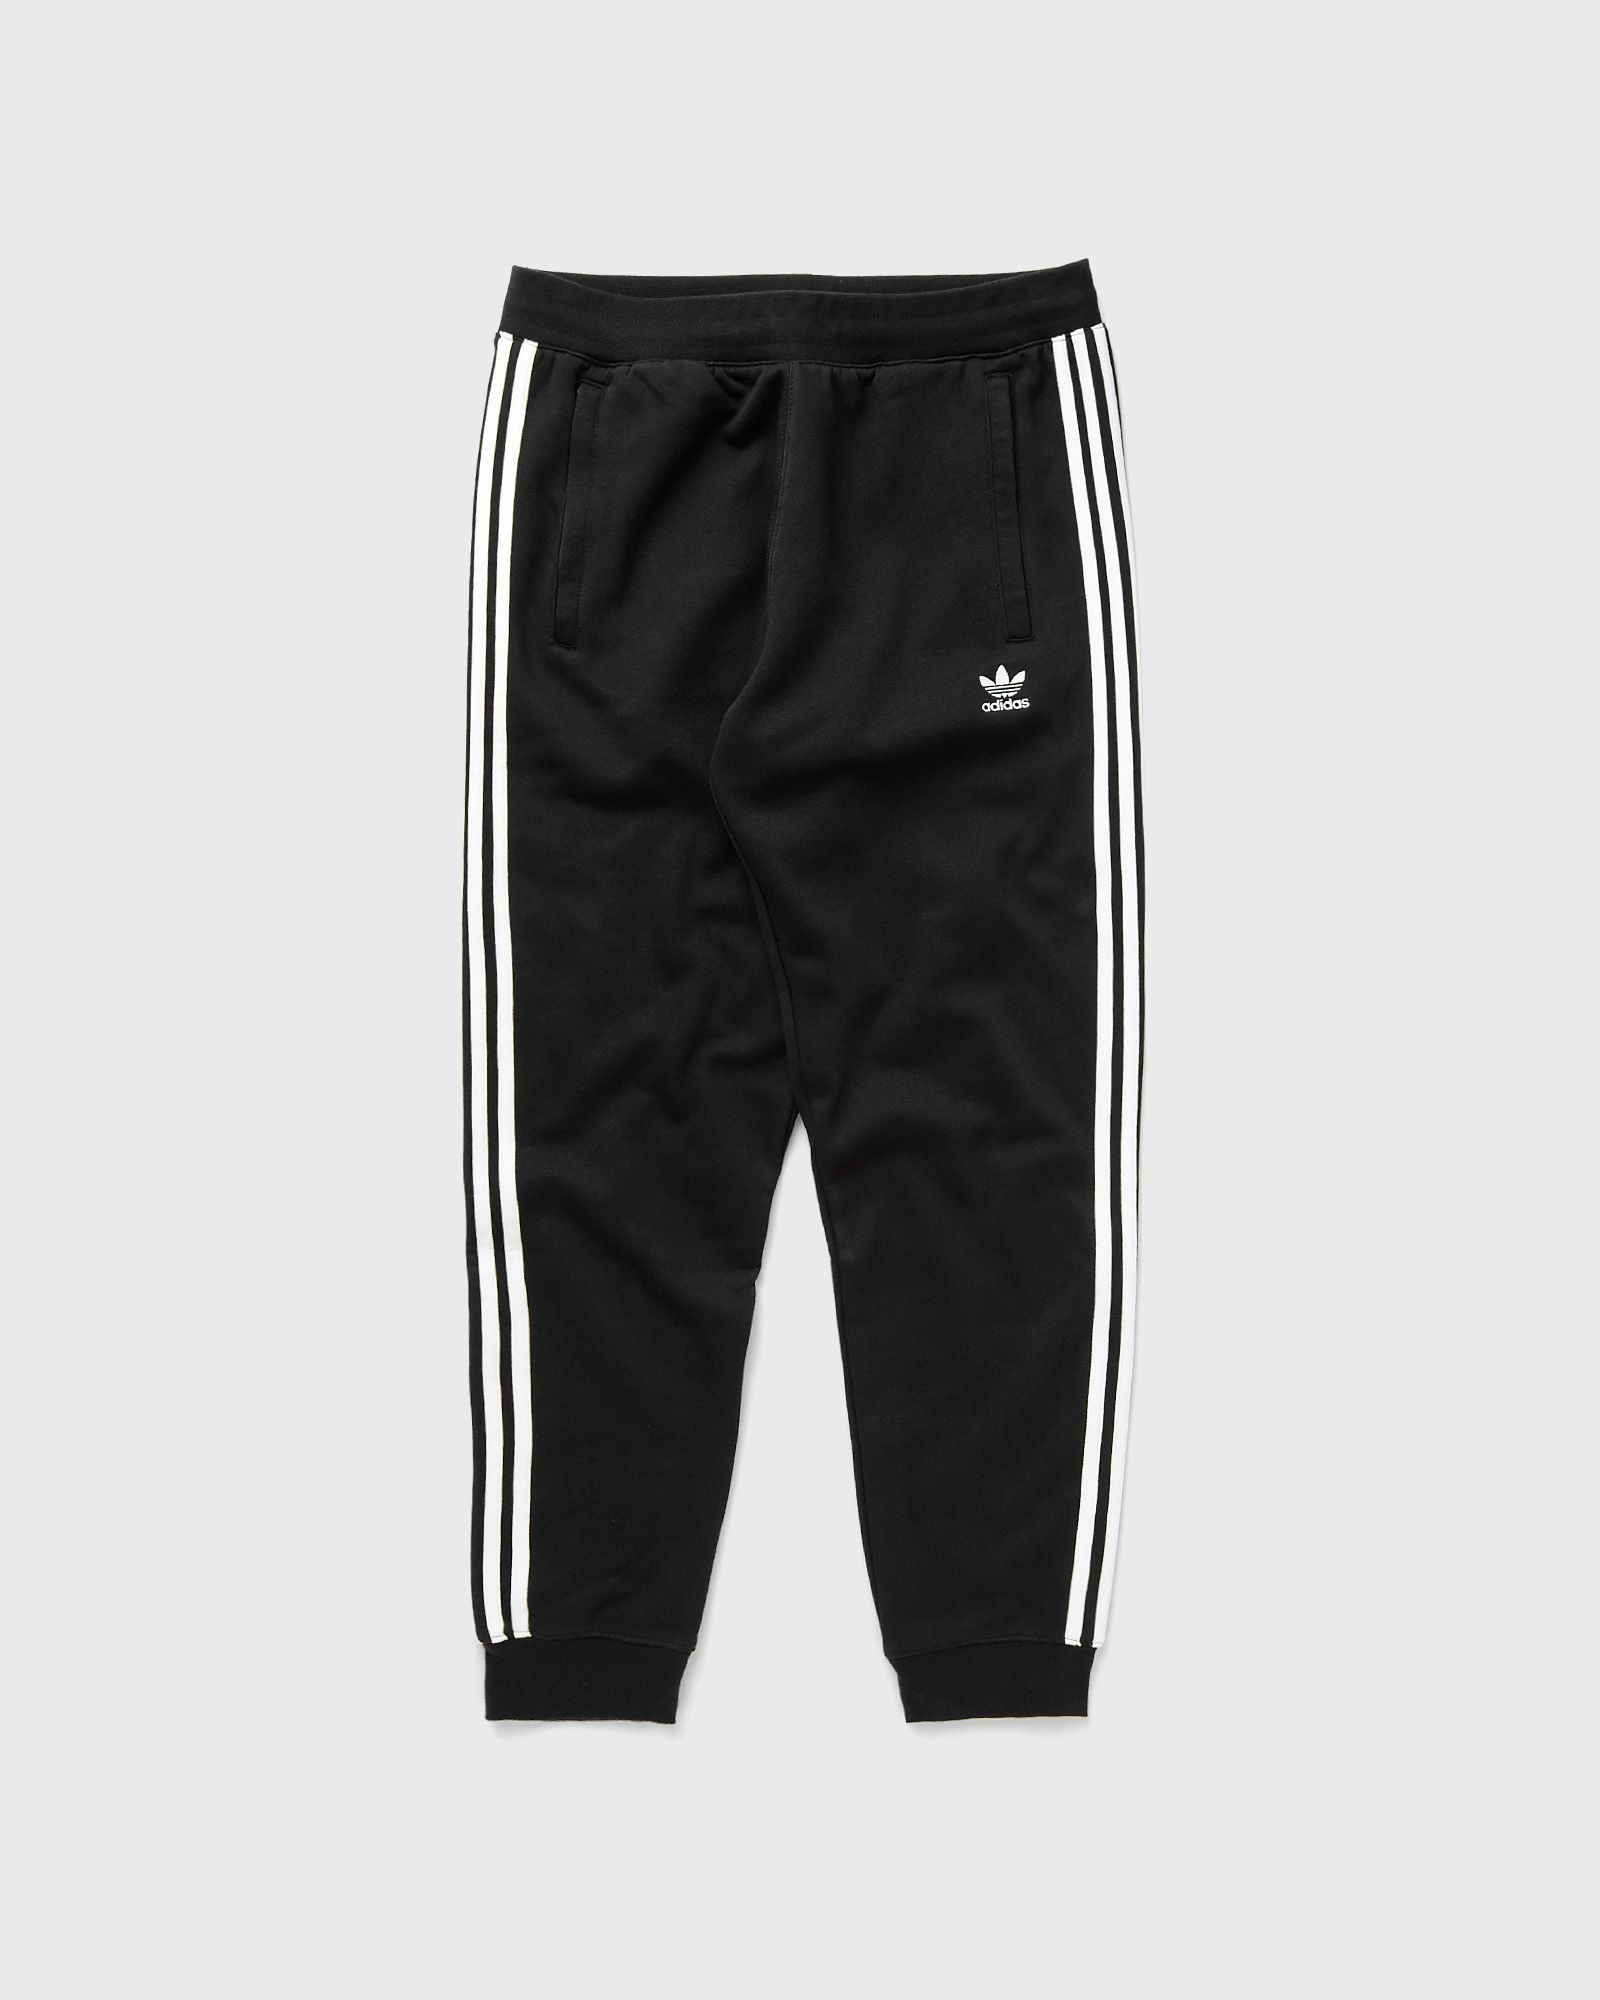 Adidas - 3-stripes pant men track pants black in größe:xxl